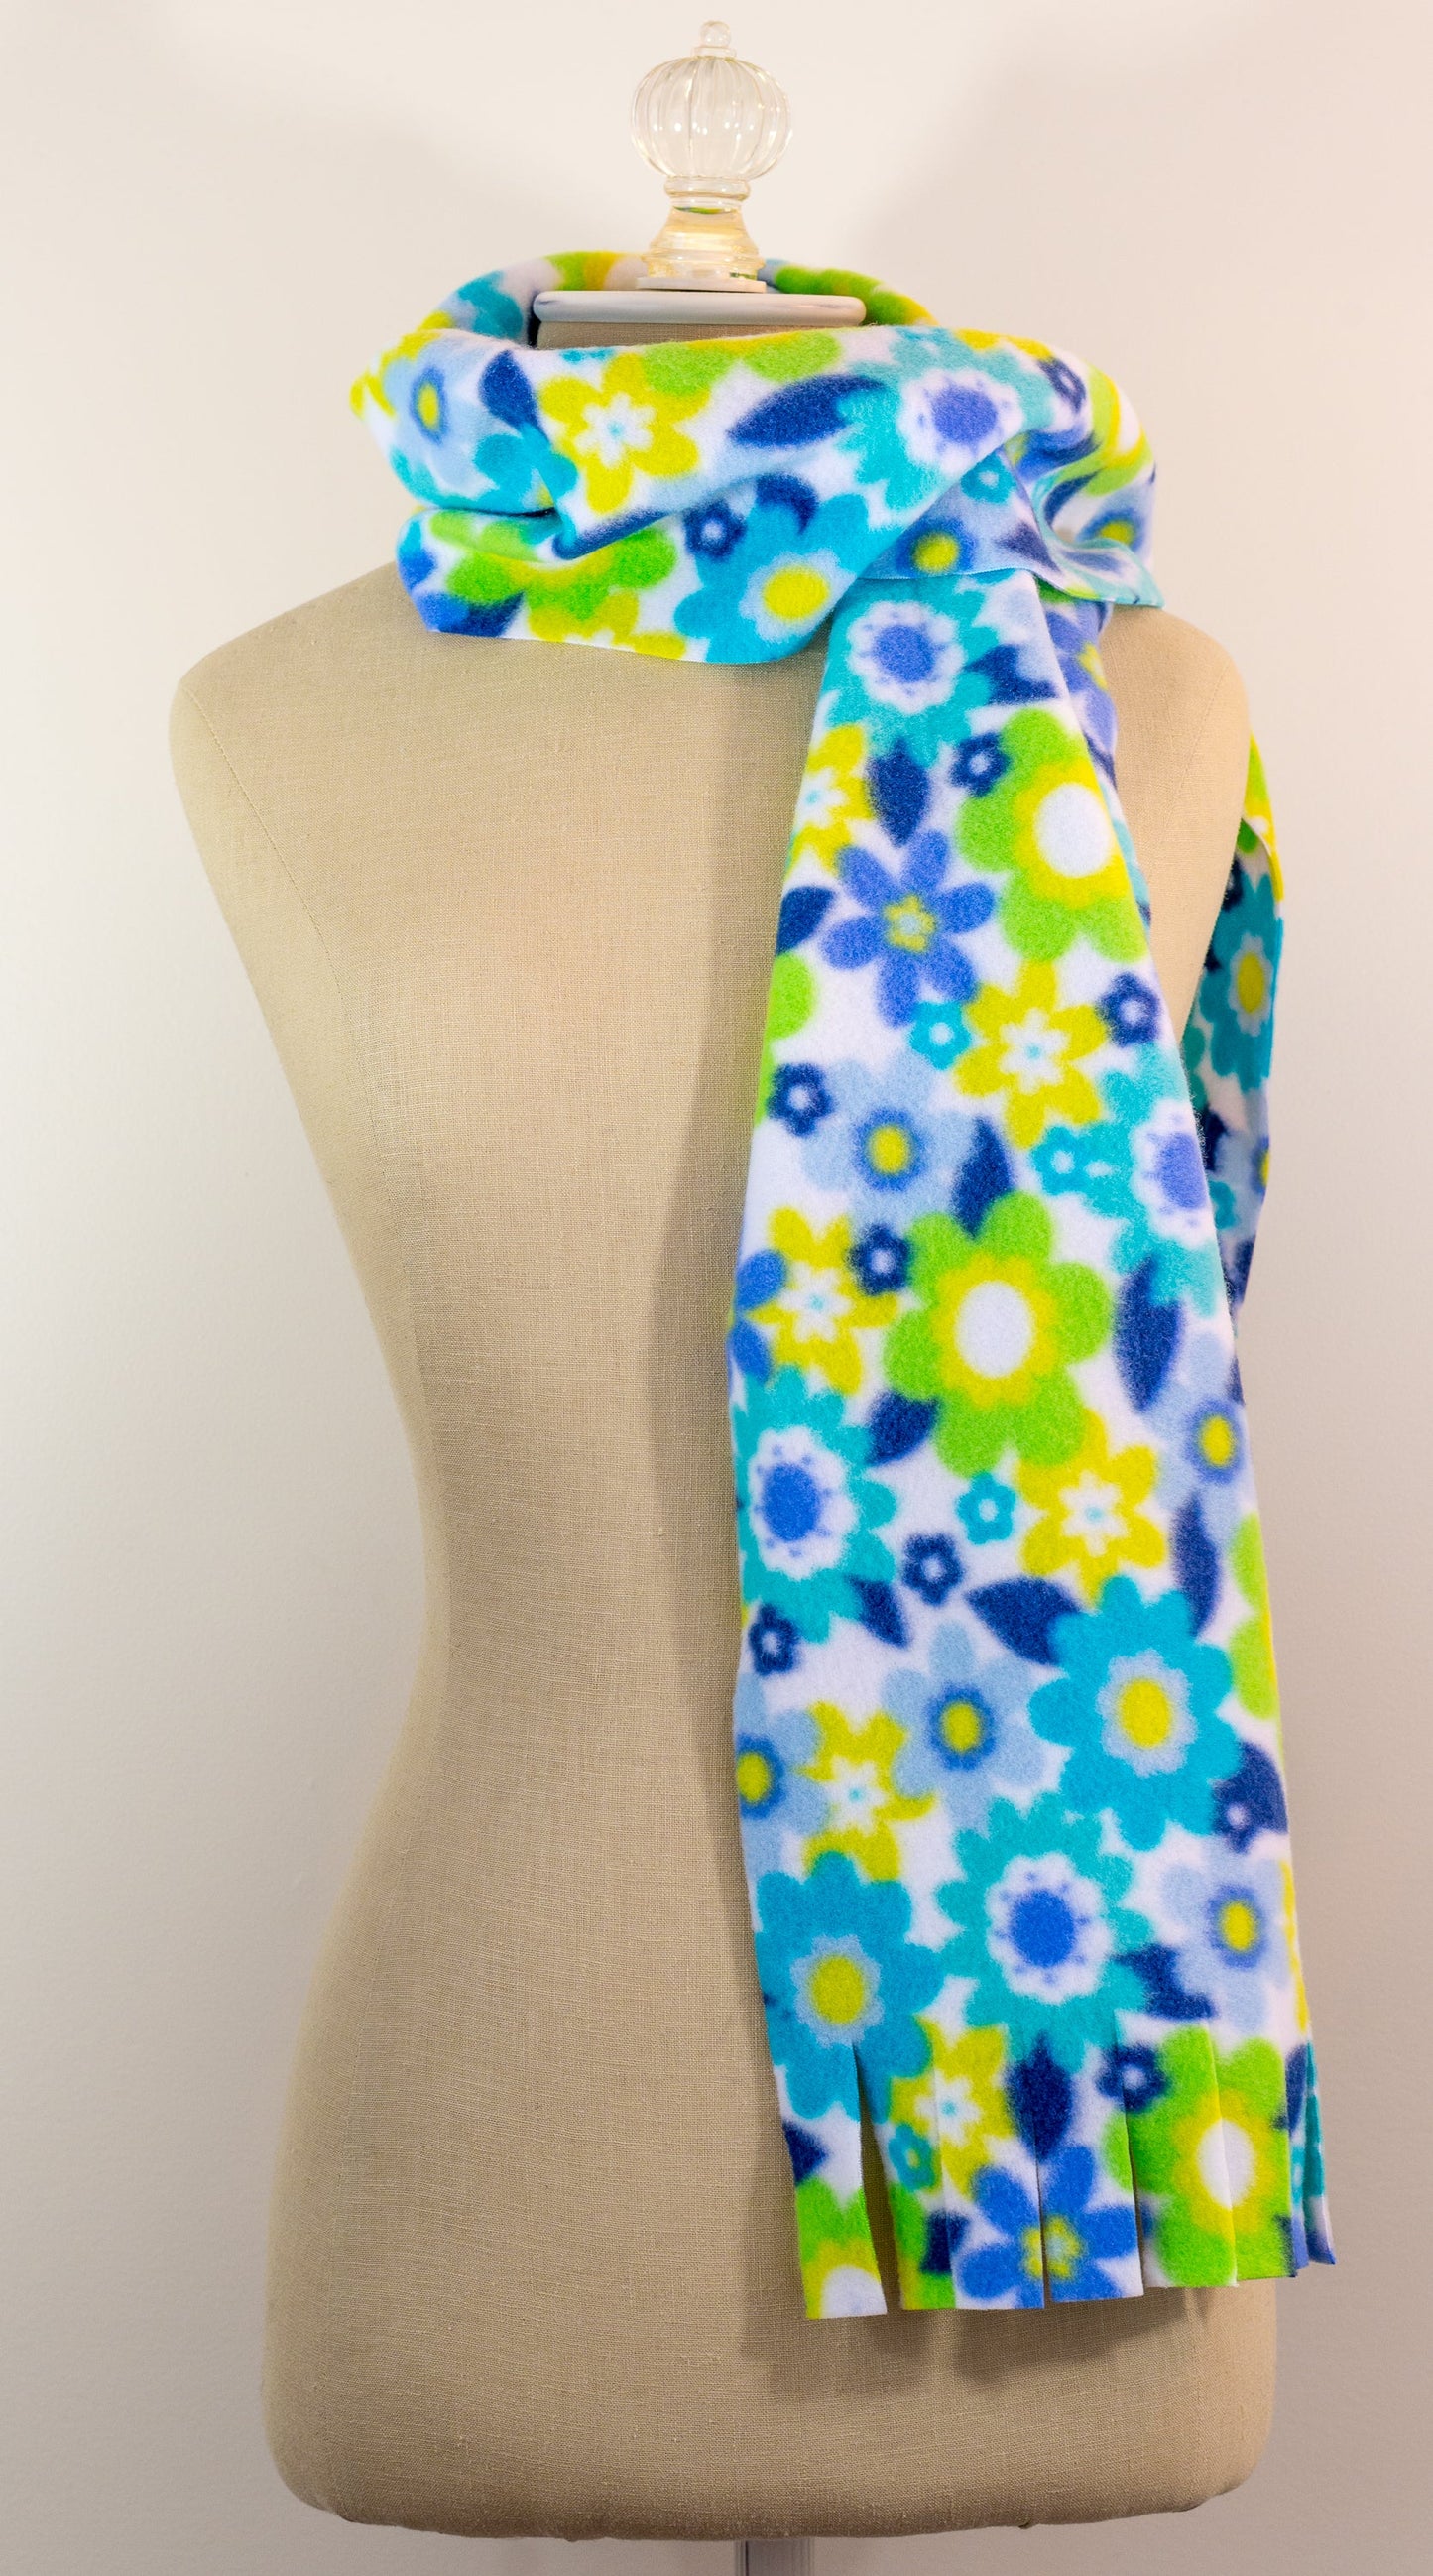 Blue and Yellow Floral Polar Fleece Scarf 9" x 60" Handmade